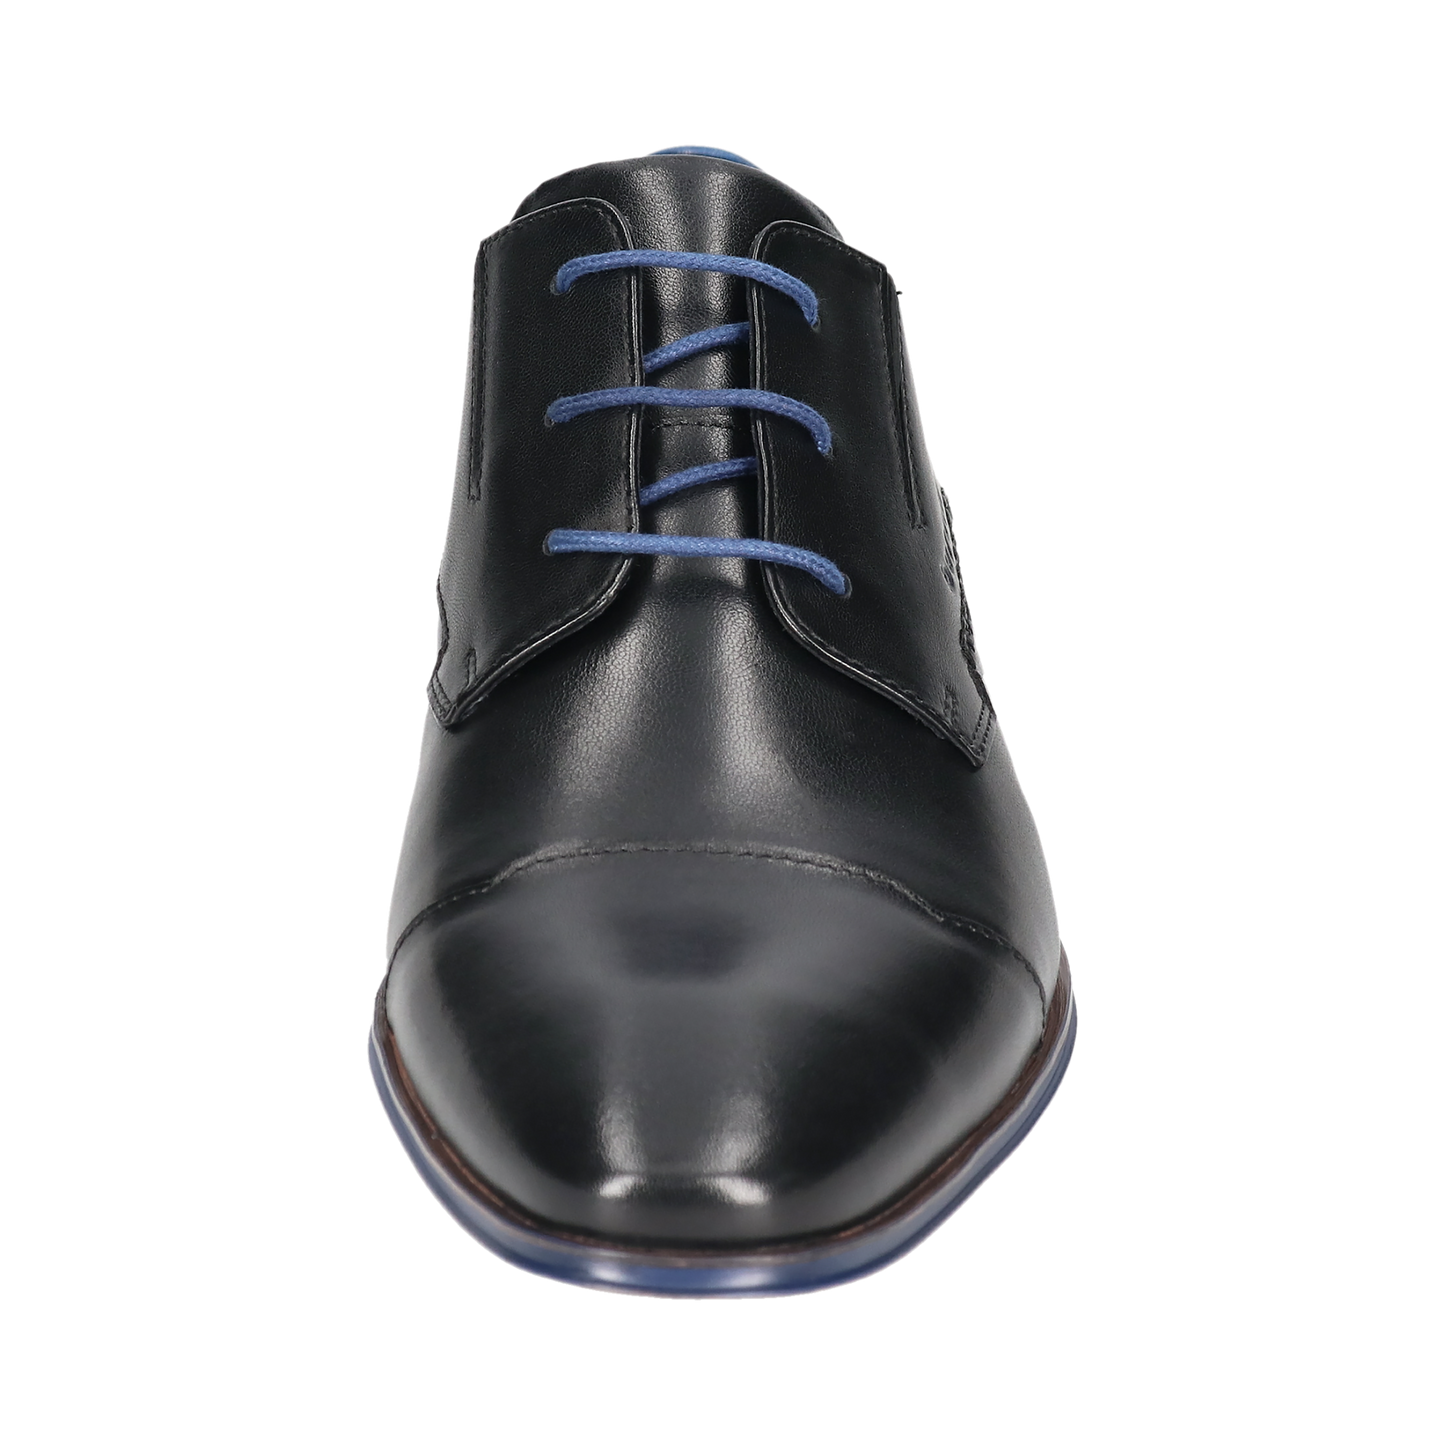 Bugatti Leather Business Shoe - Black